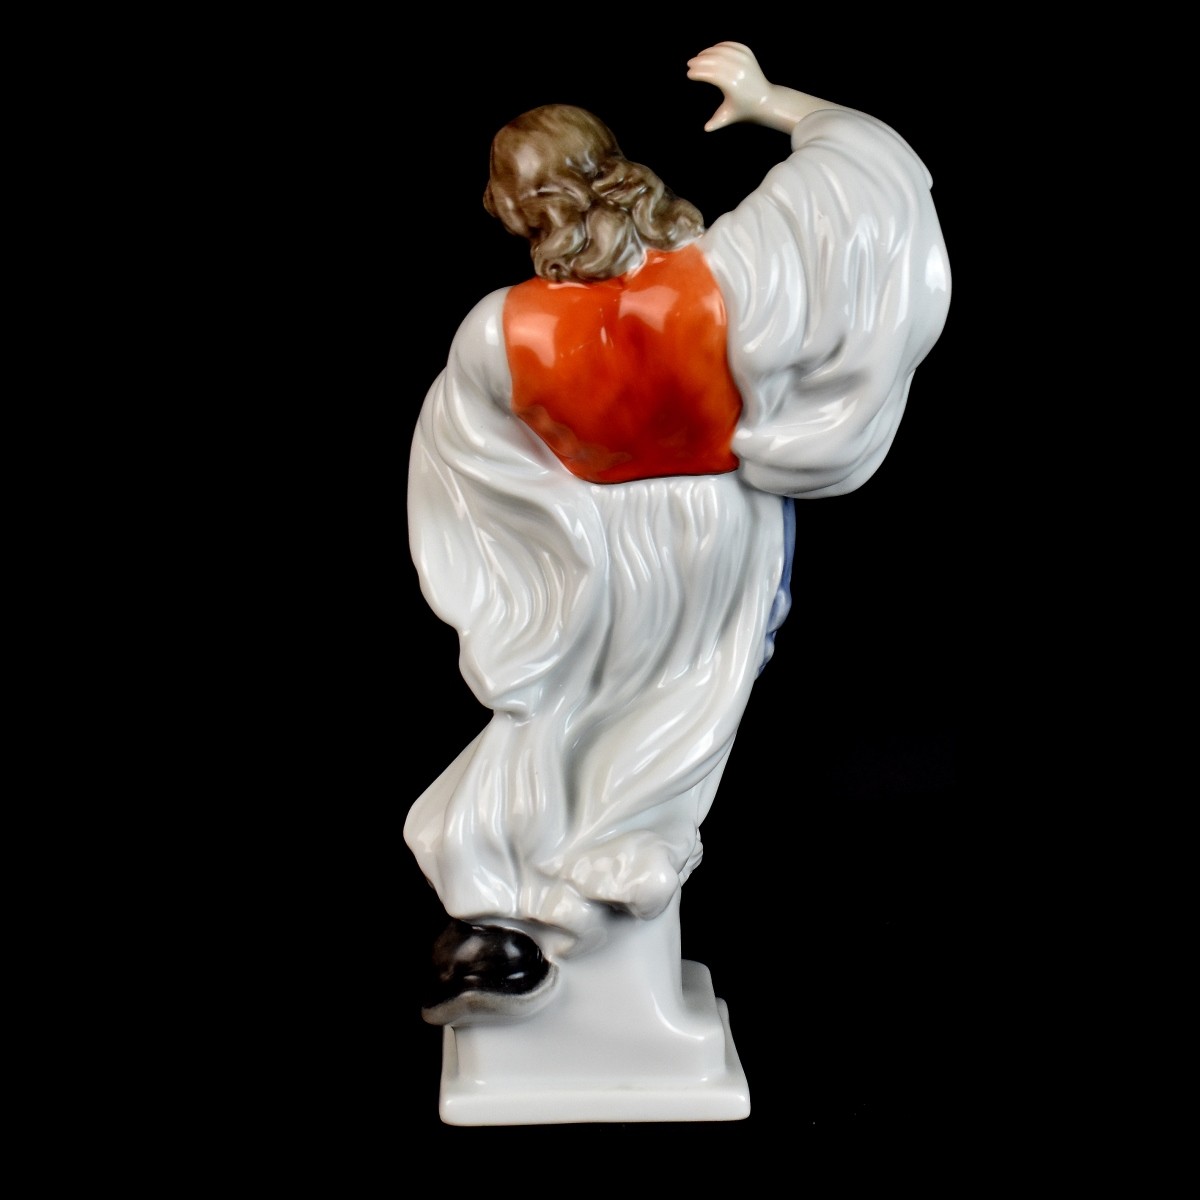 Herend "Dancing Man" Figurine